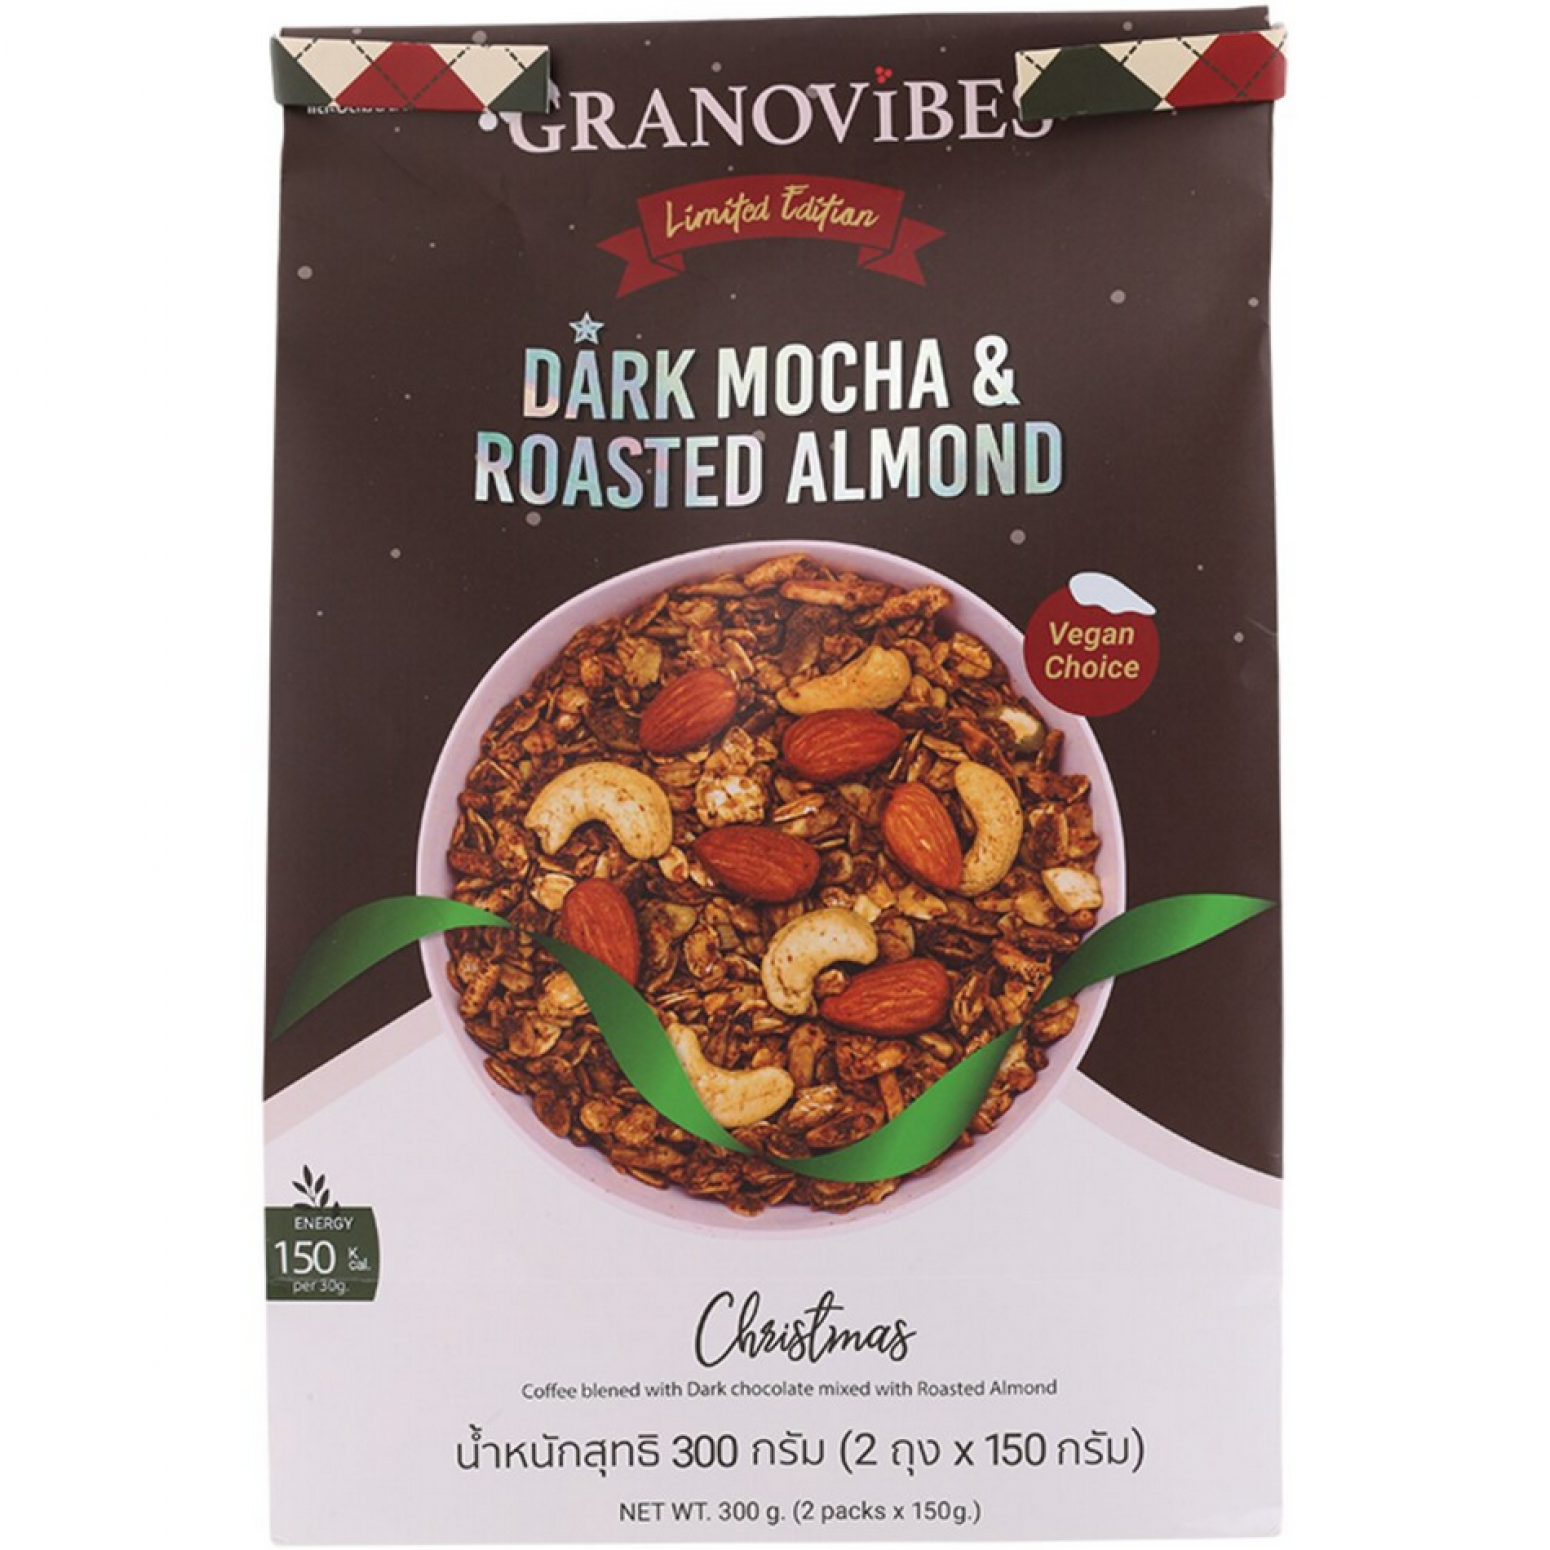 Granovibes Granola Dark Mocha and Roasted Almond 300g.